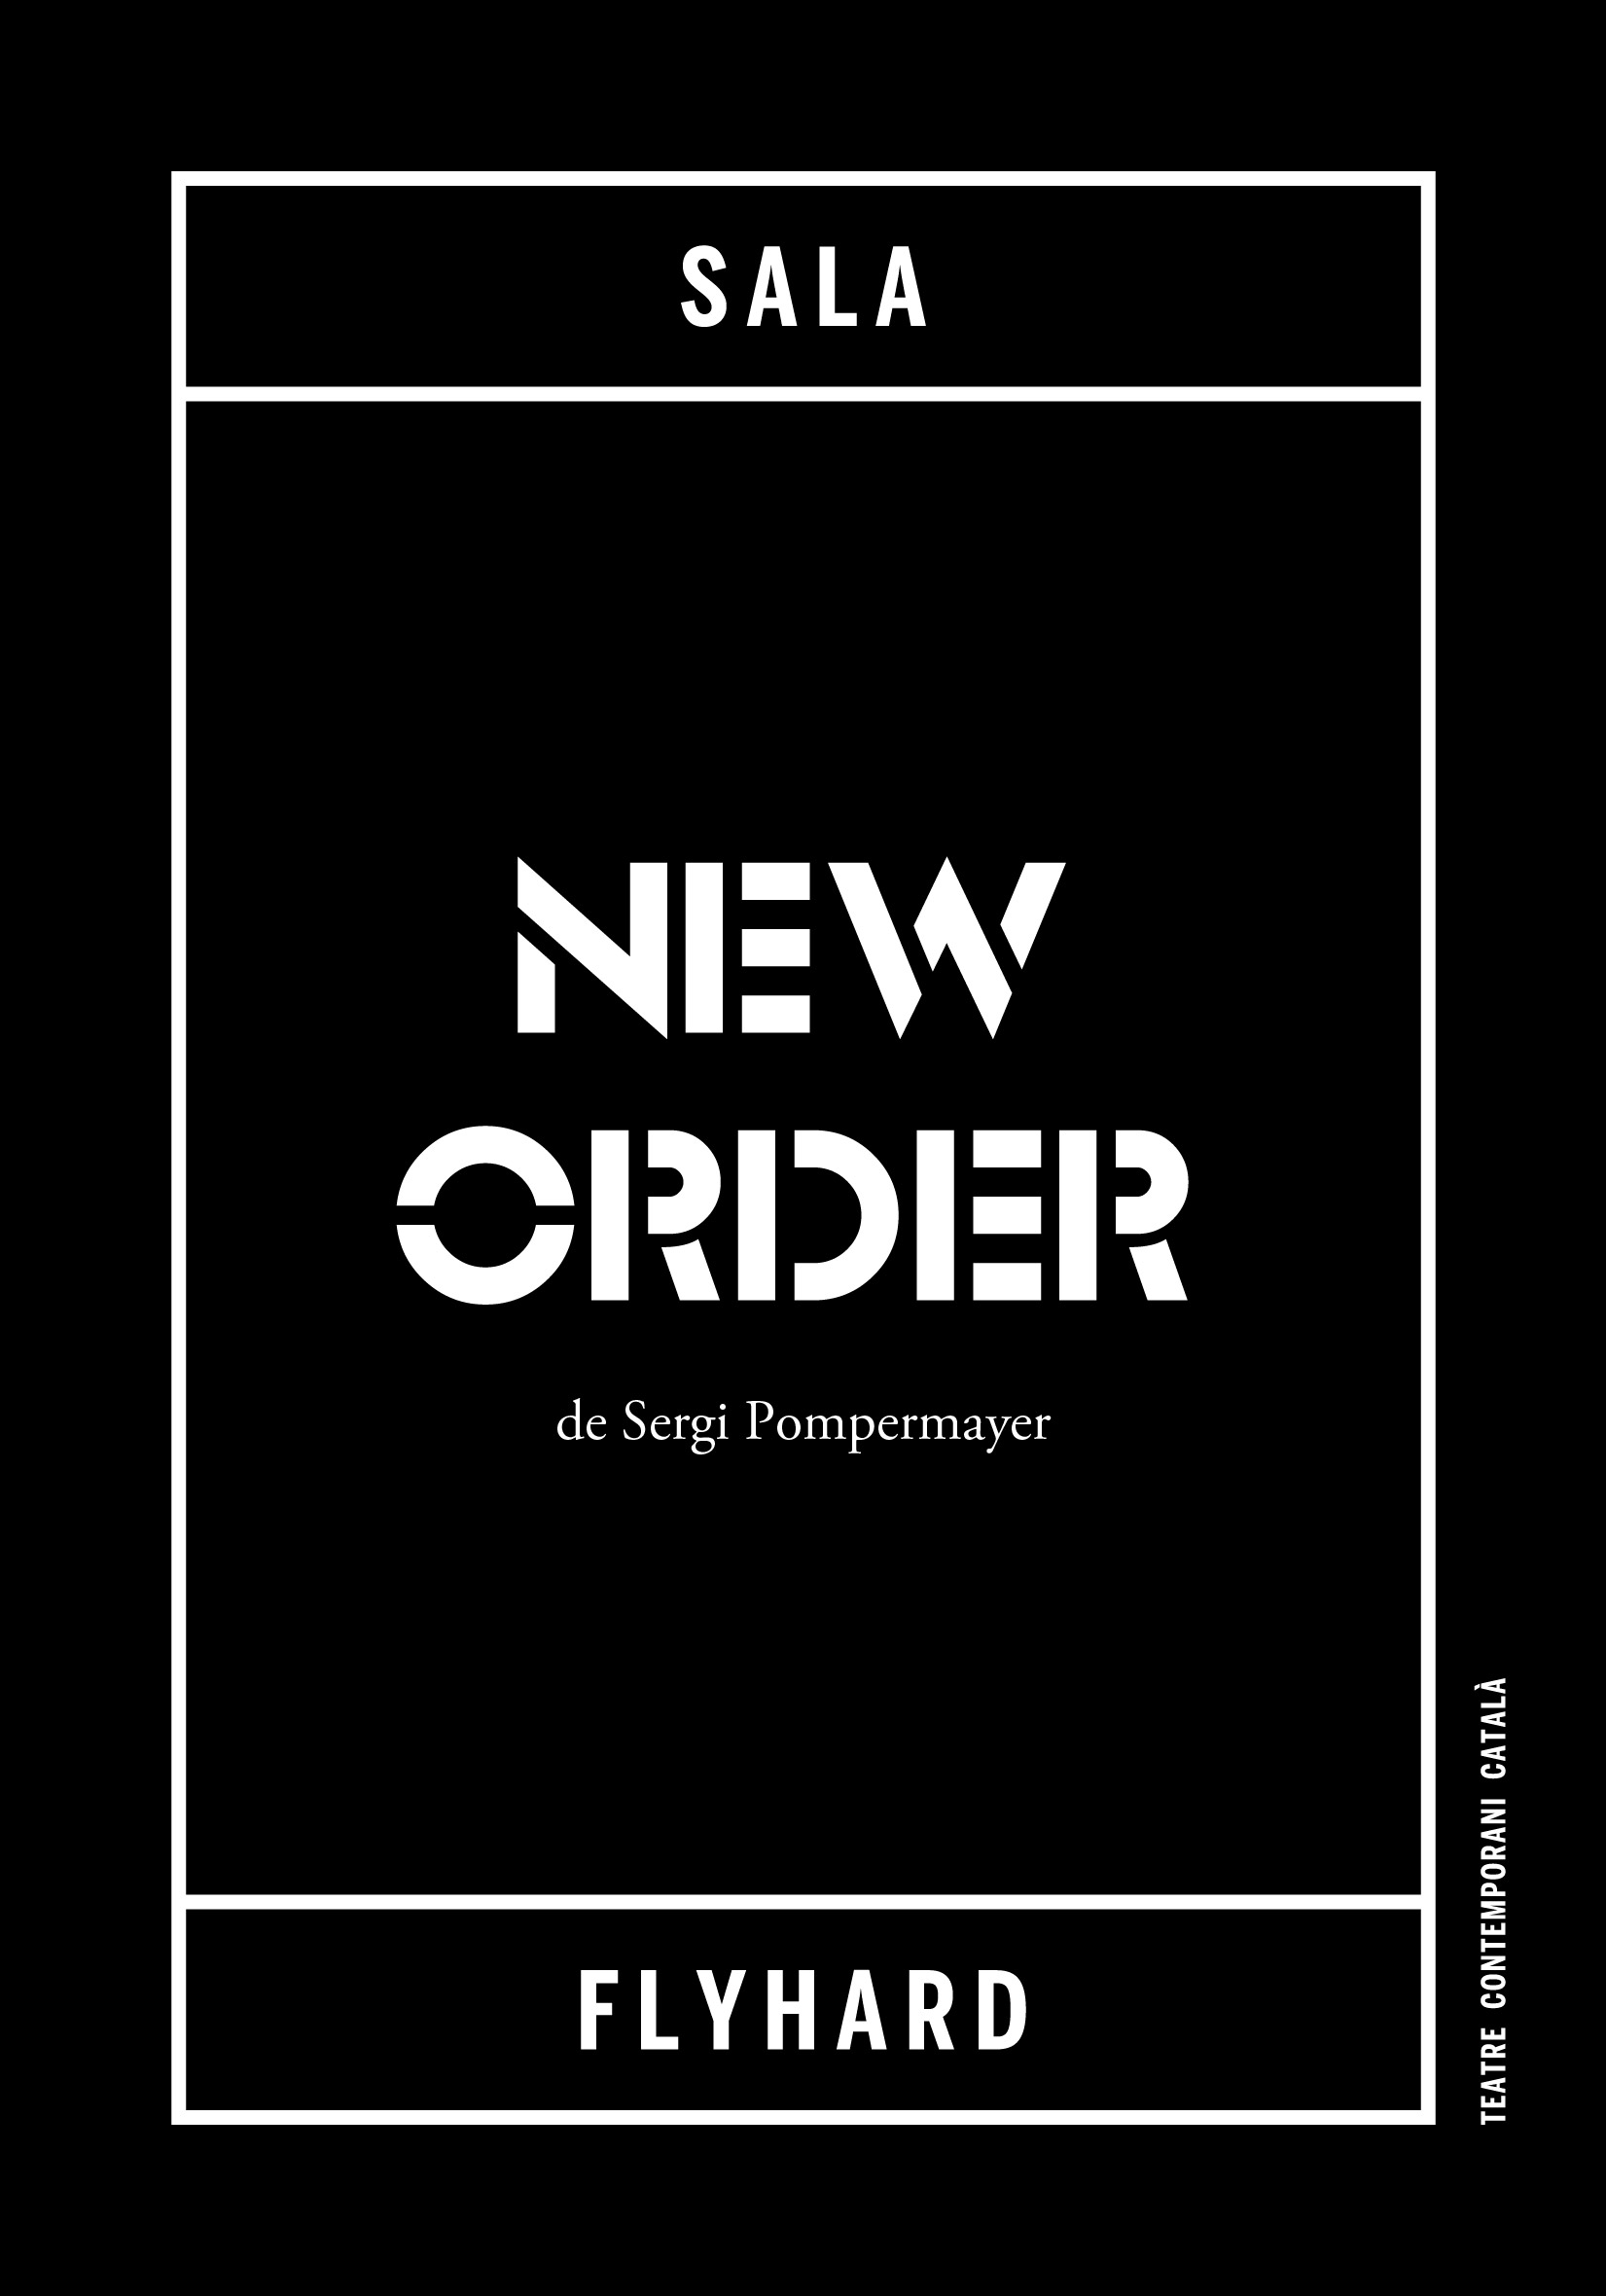 New order